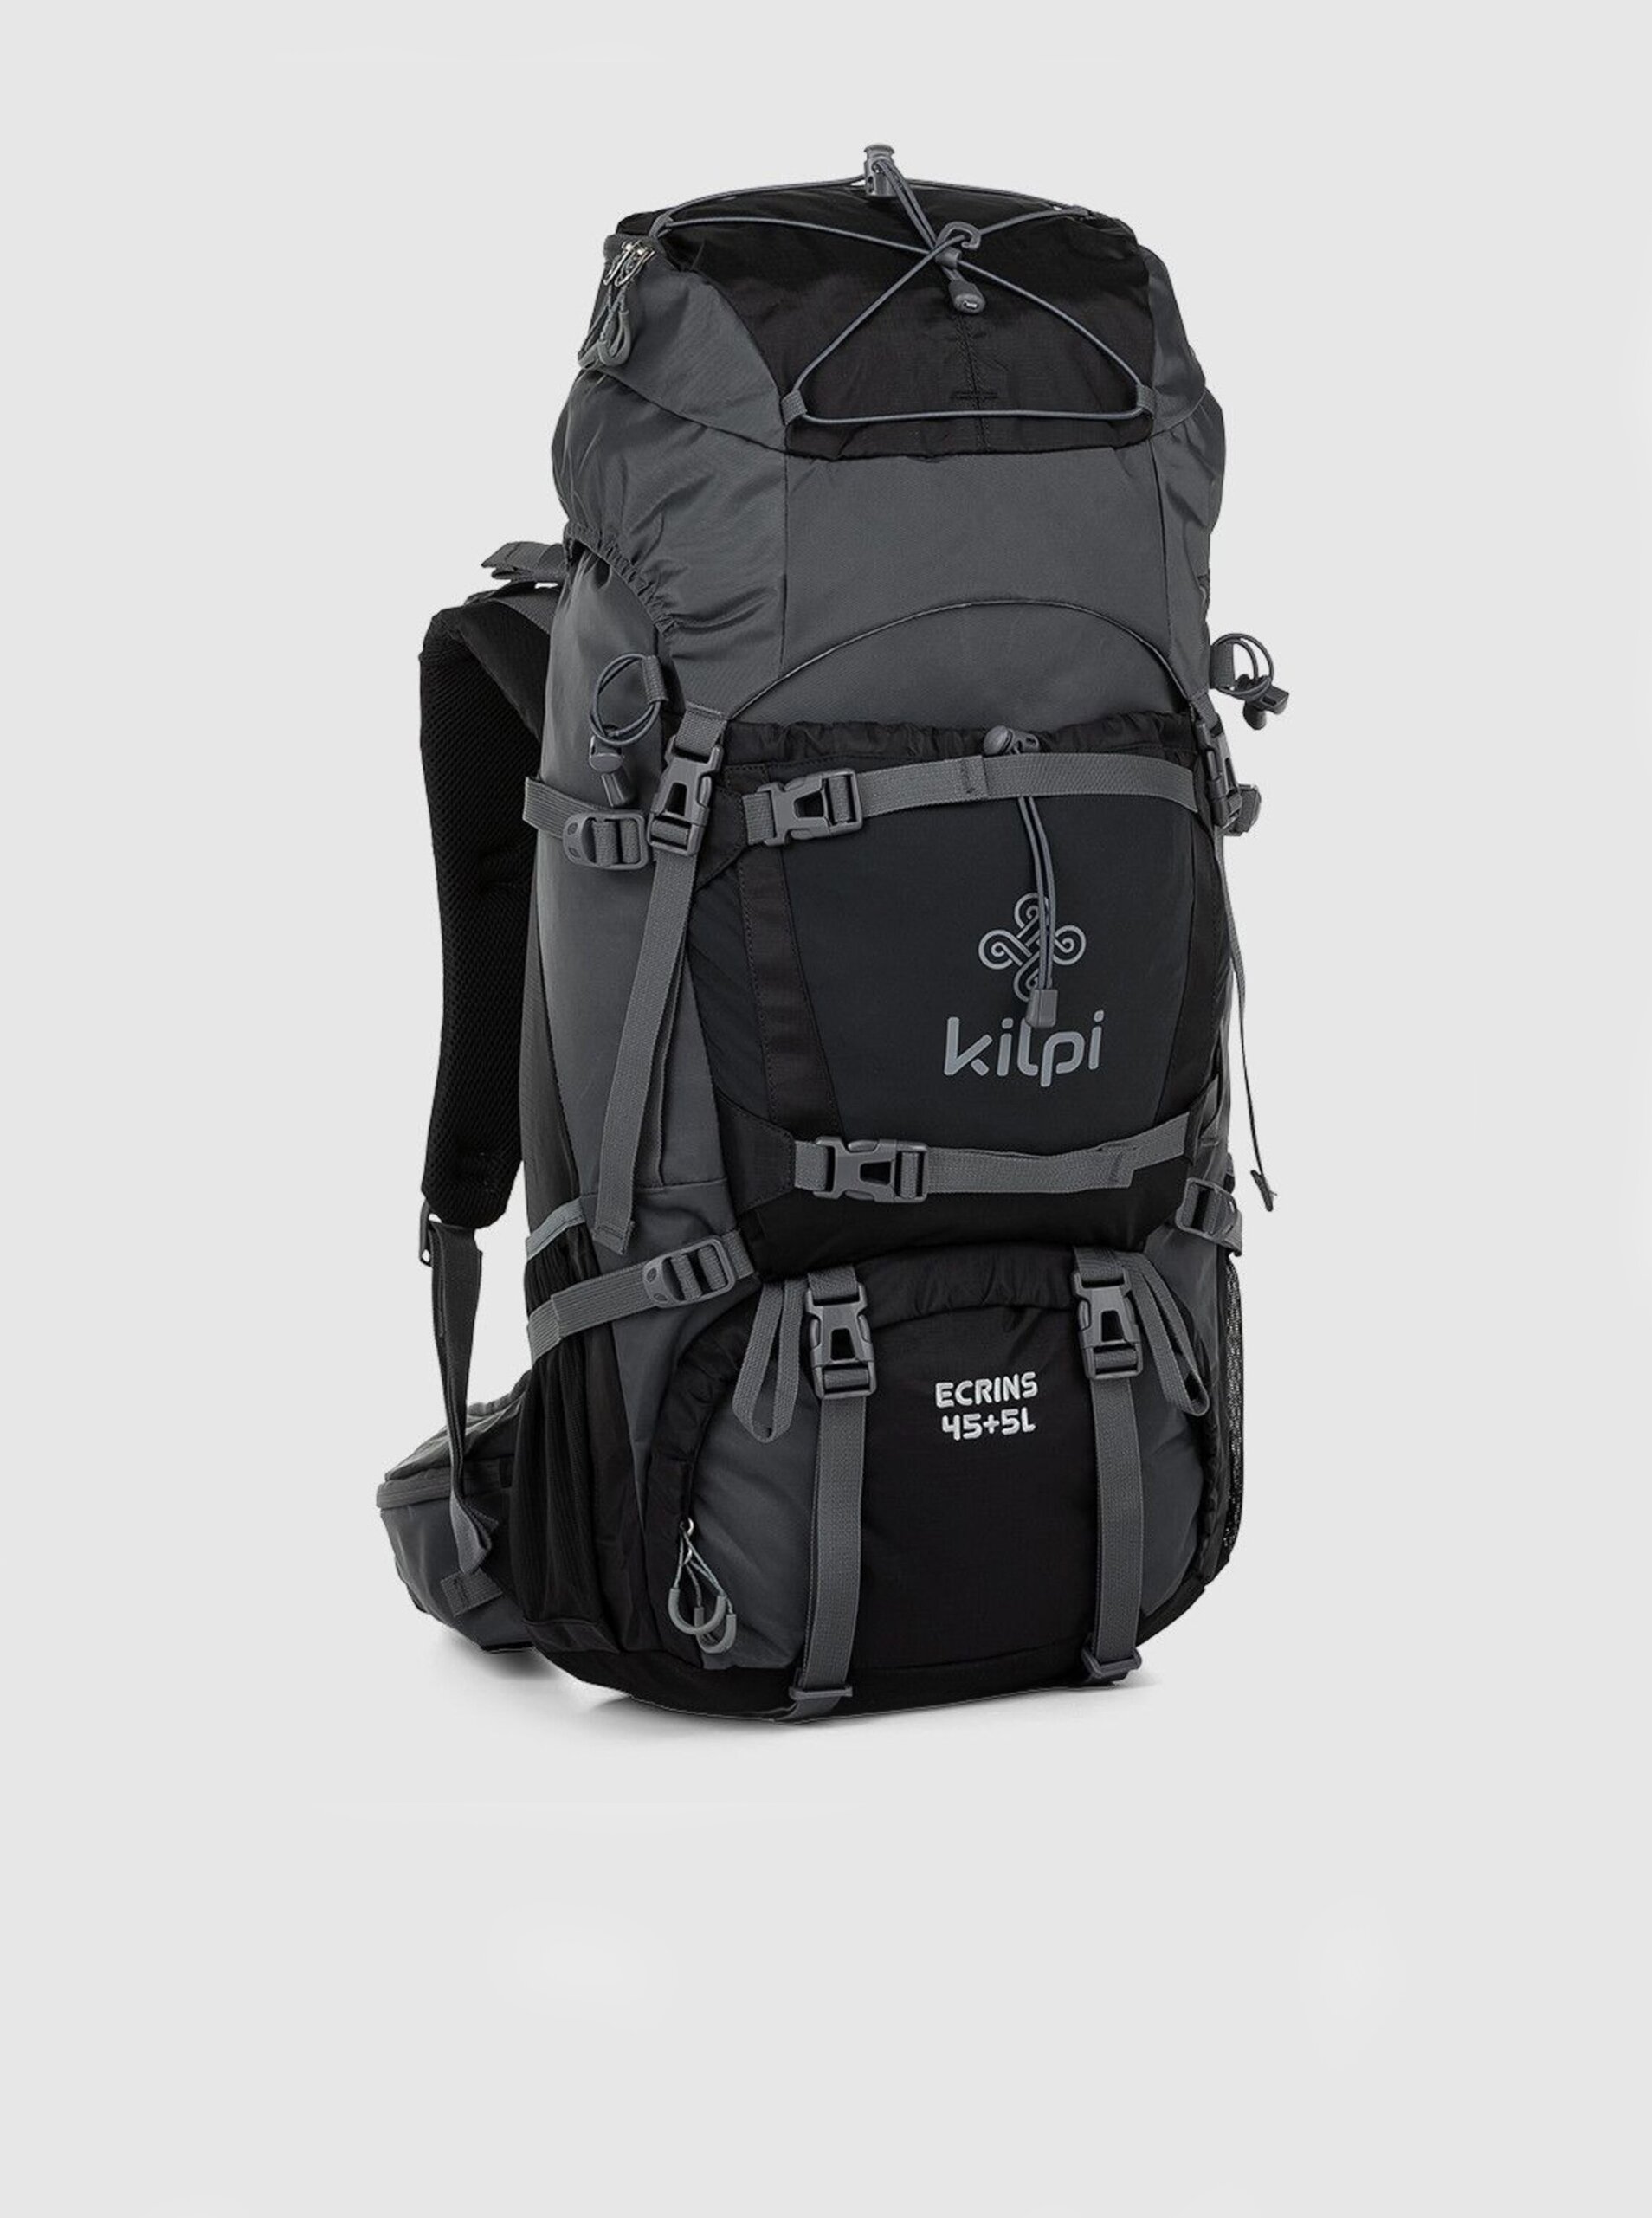 Lacno Šedo-čierny unisex športový ruksak Kilpi ECRINS (45+5 l)